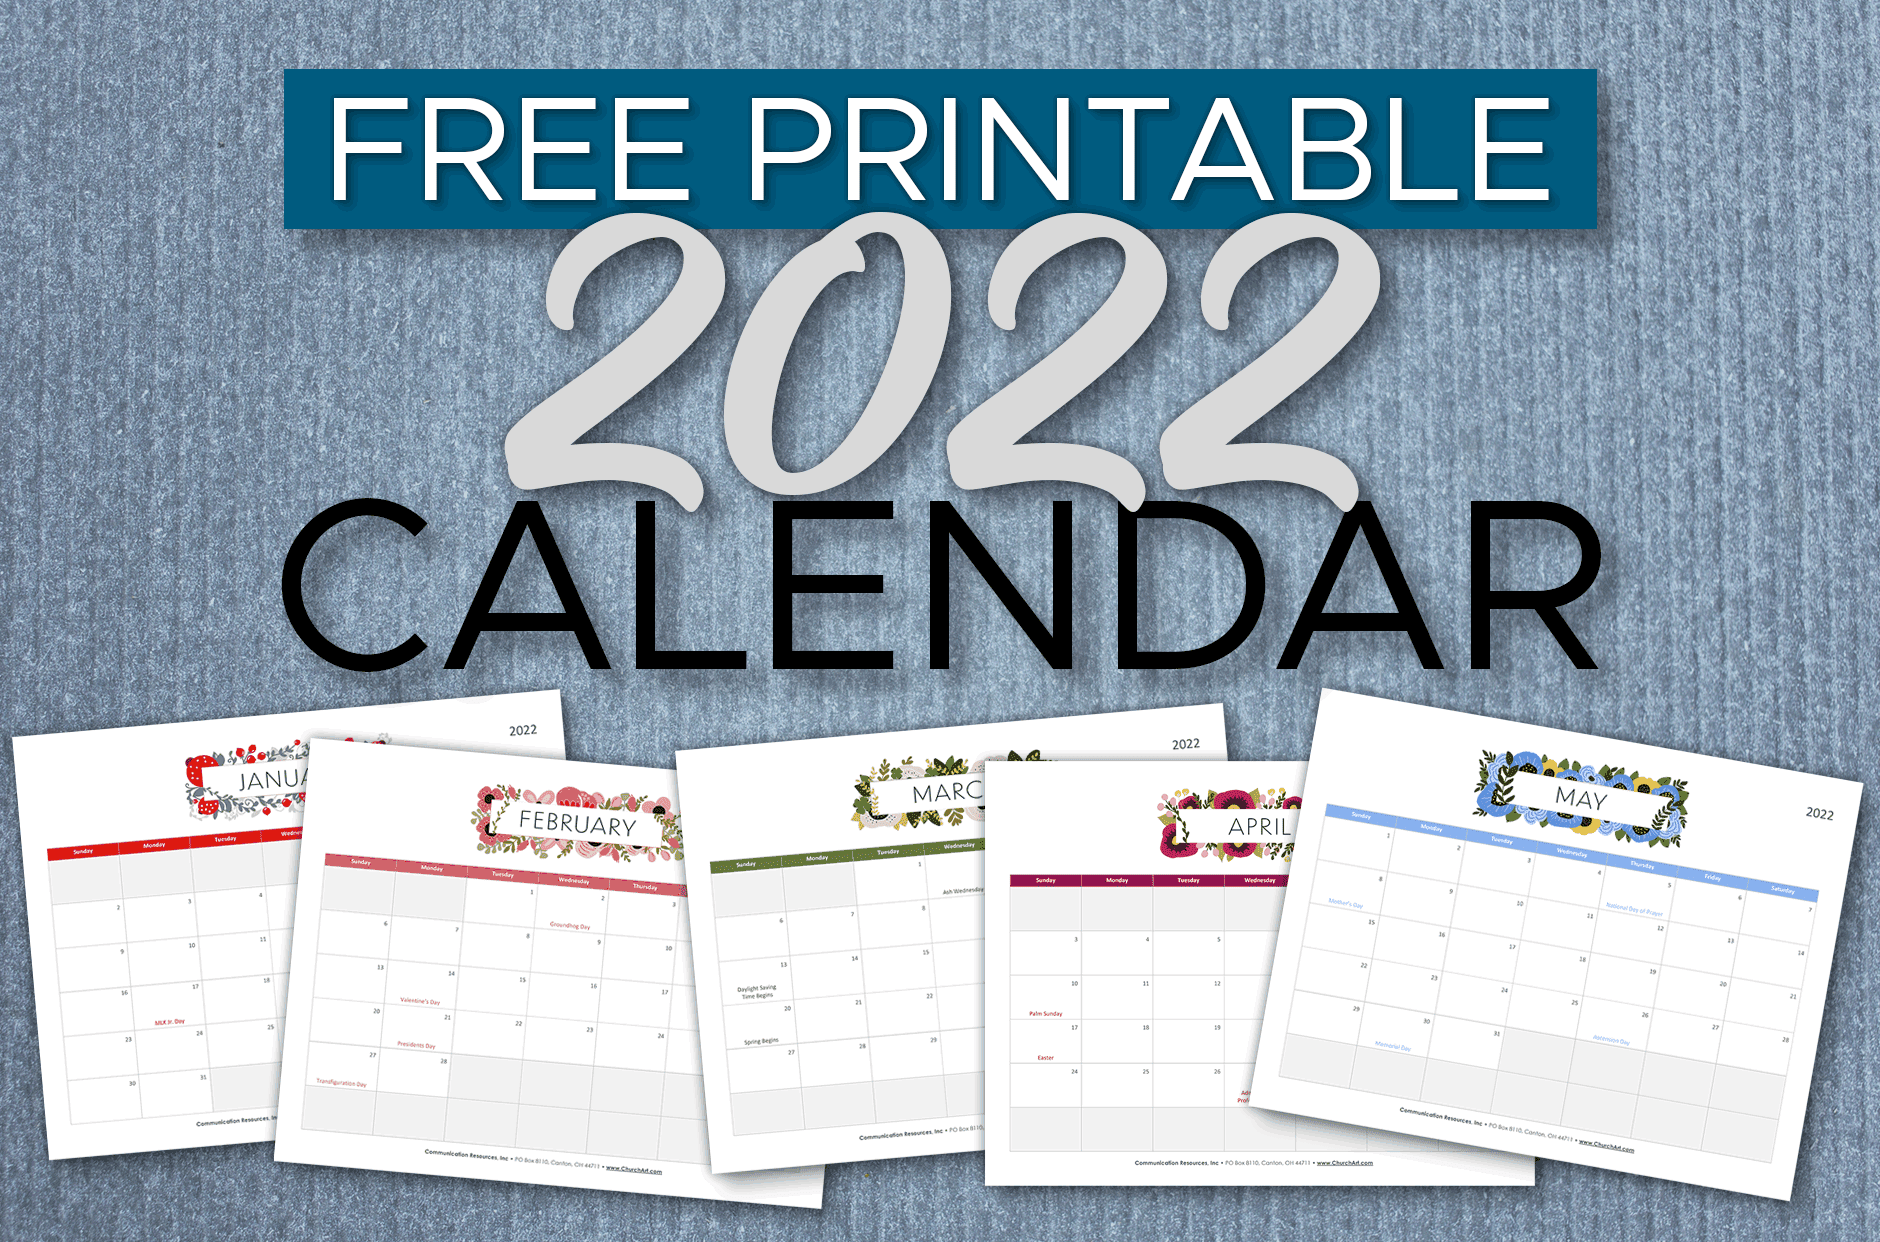 Presbyterian Planning Calendar 2022 Free Printable 2022 Church Calendar | Churchart.com Blog